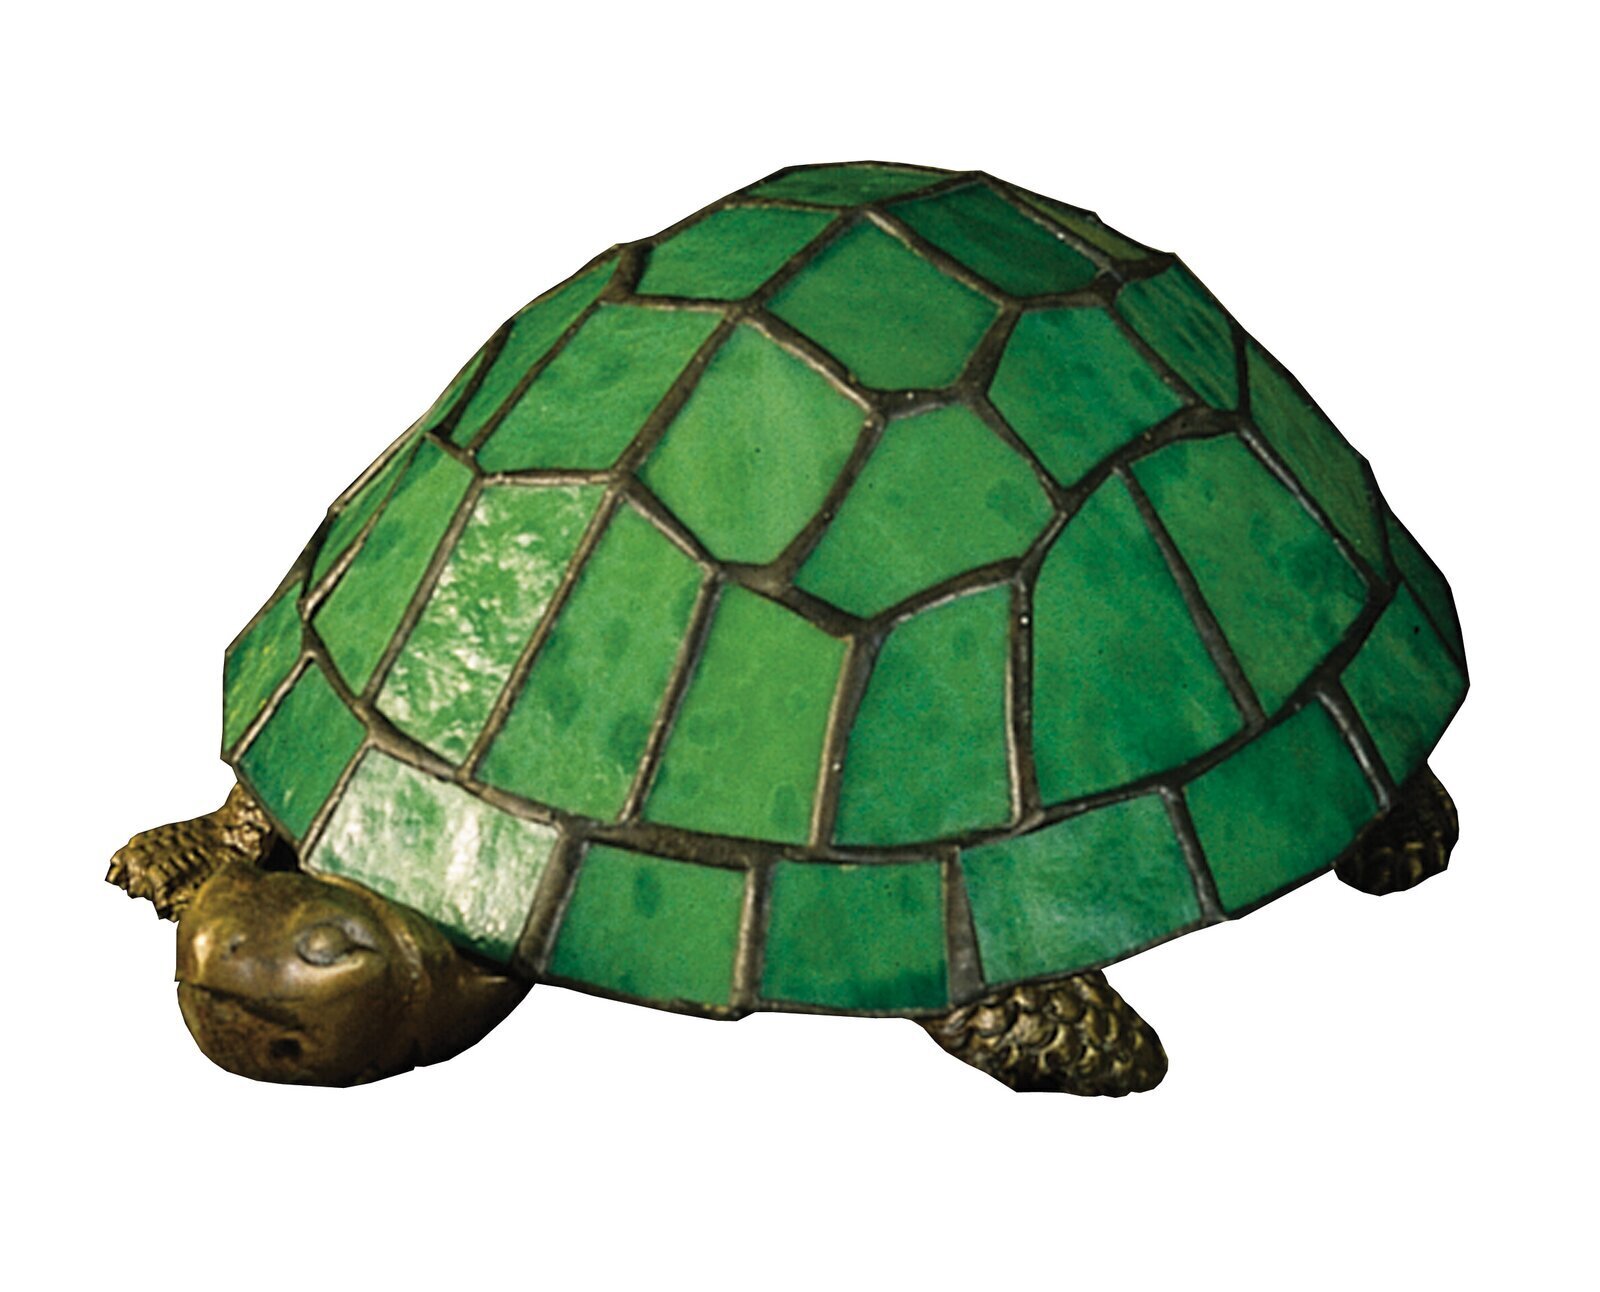 Vintage Turtle Lamp in Classic Color Scheme